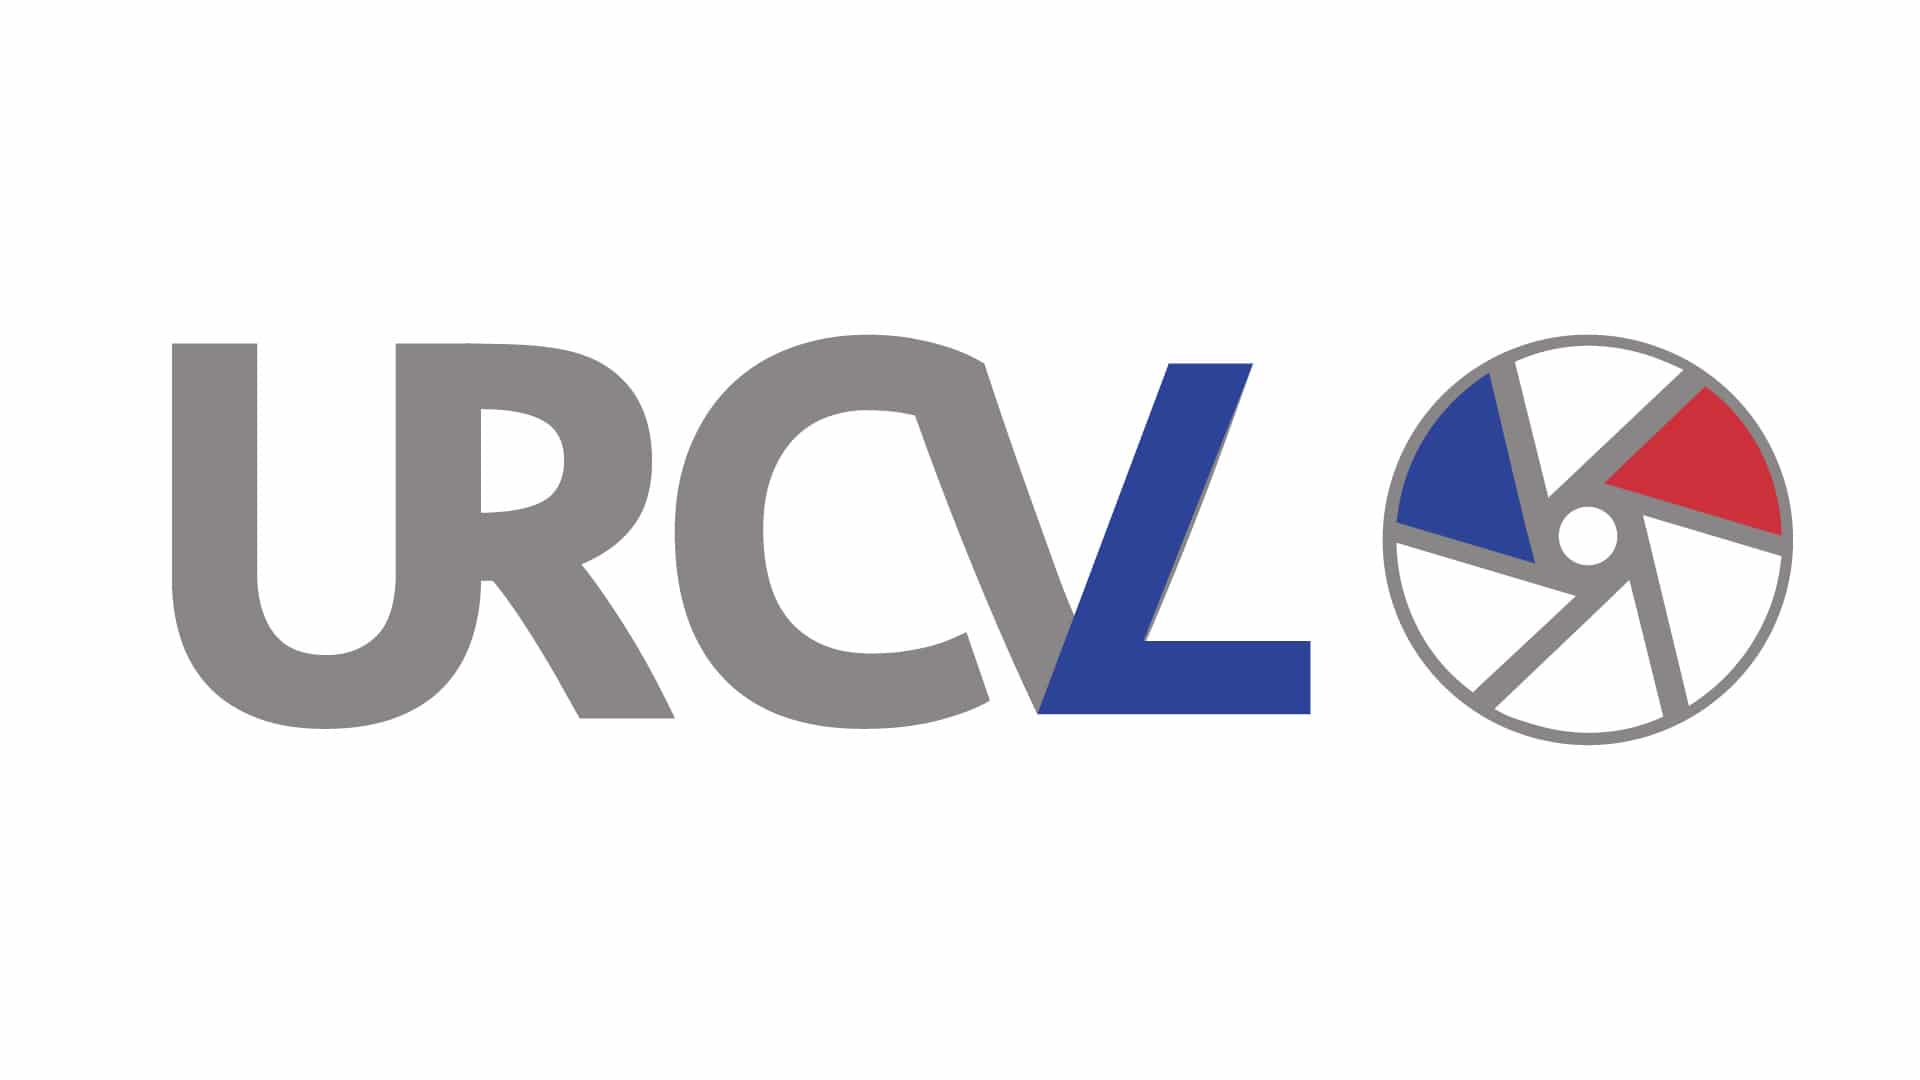 URCVL logo jpeg fond blanc